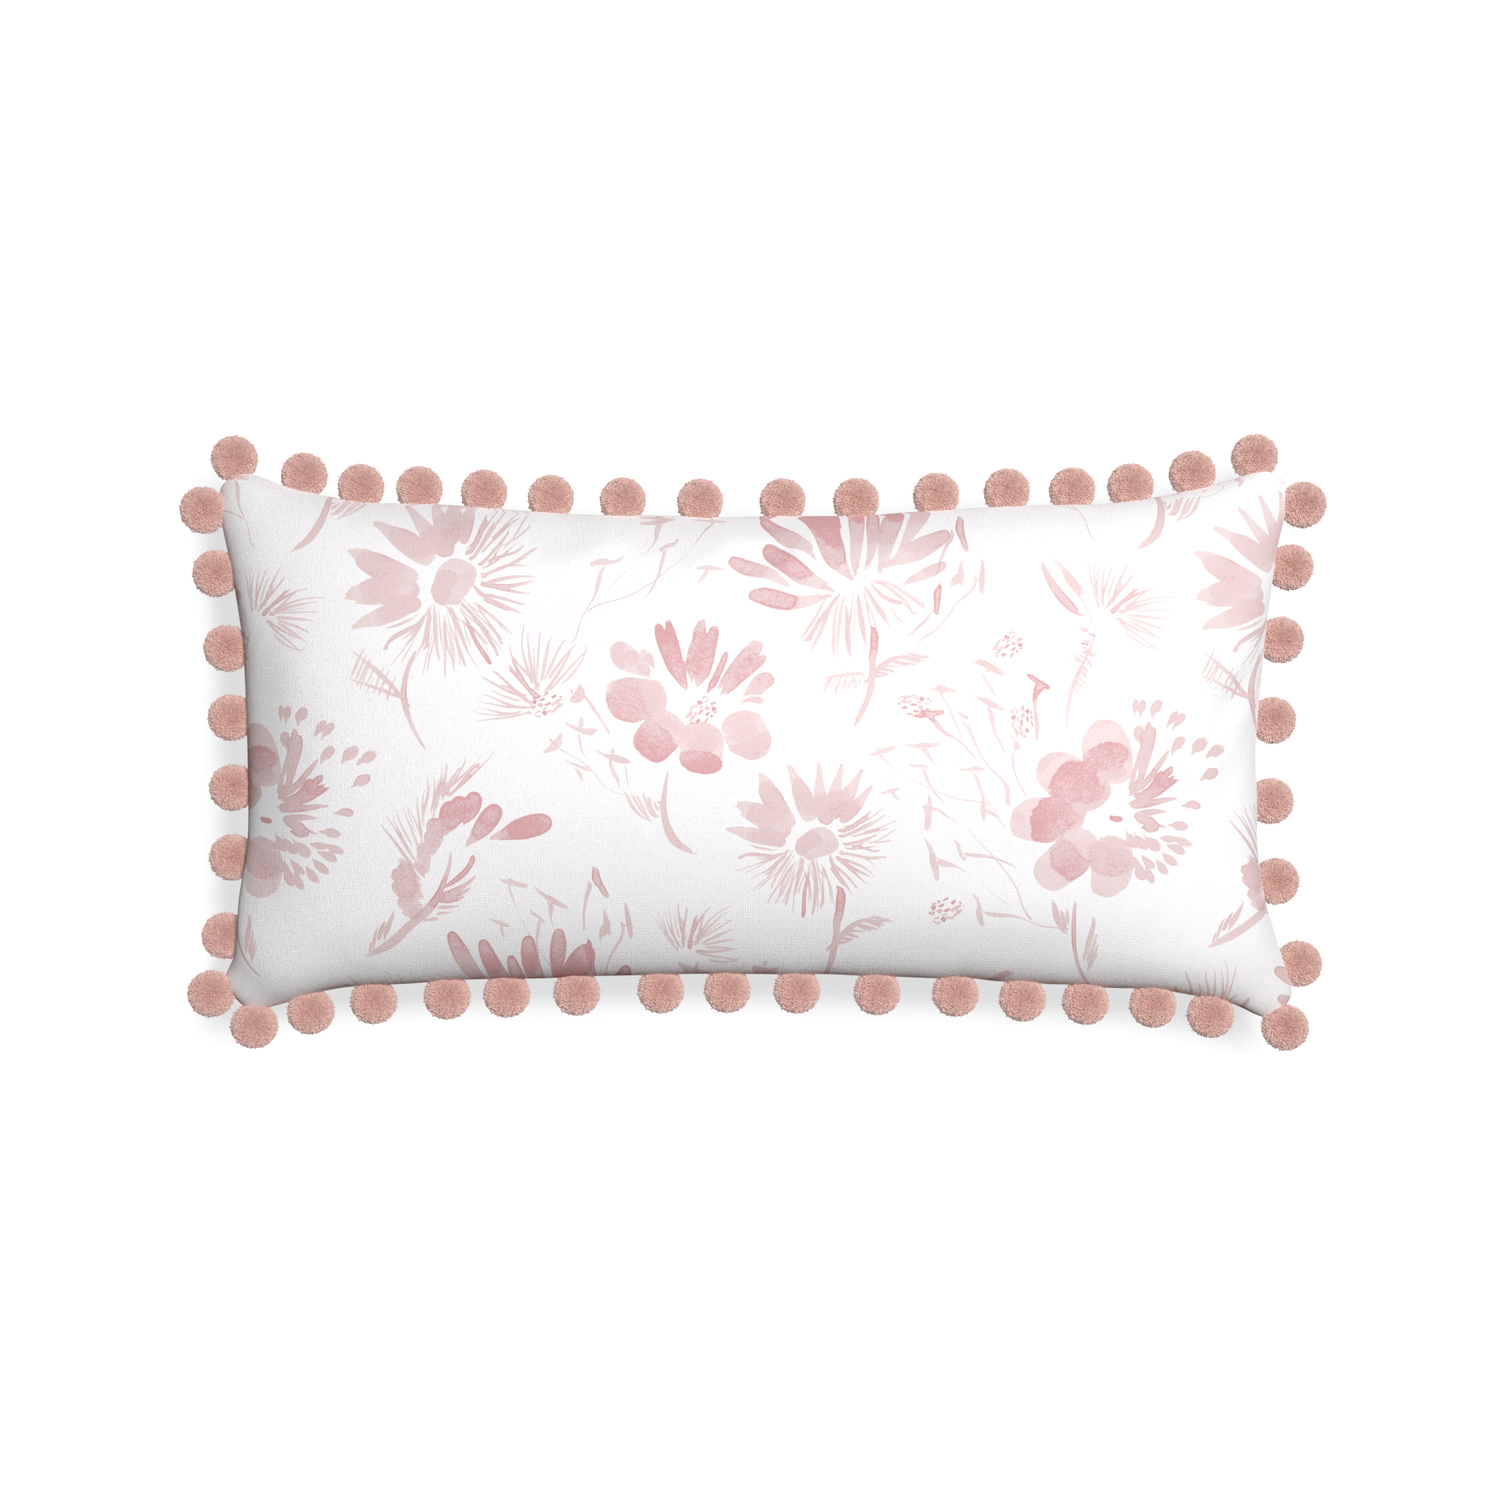 Midi-lumbar blake custom pink floralpillow with rose pom pom on white background